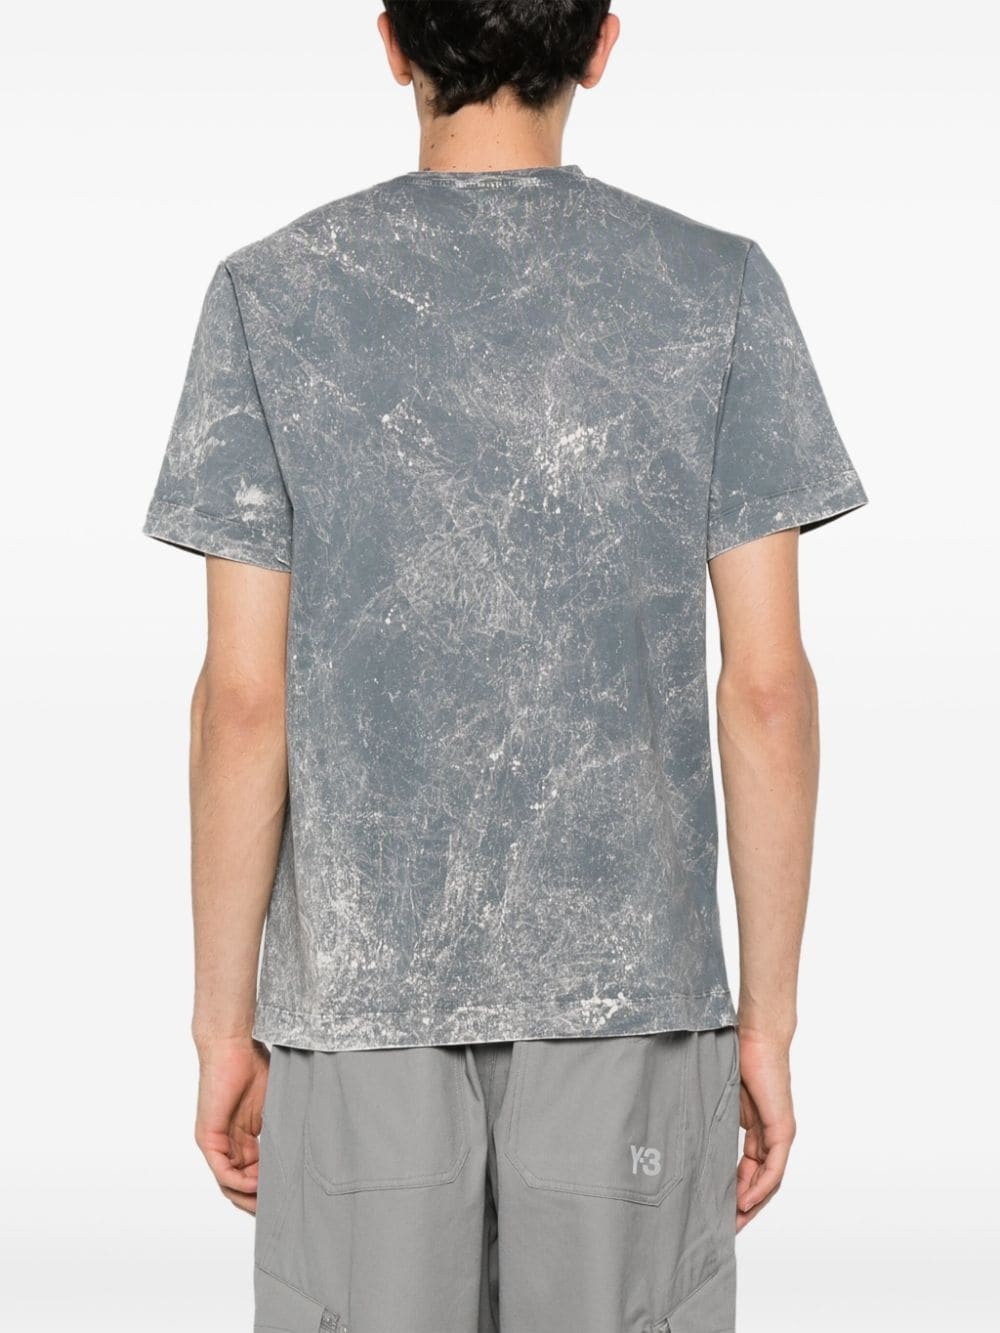 star-print cotton T-shirt - 4